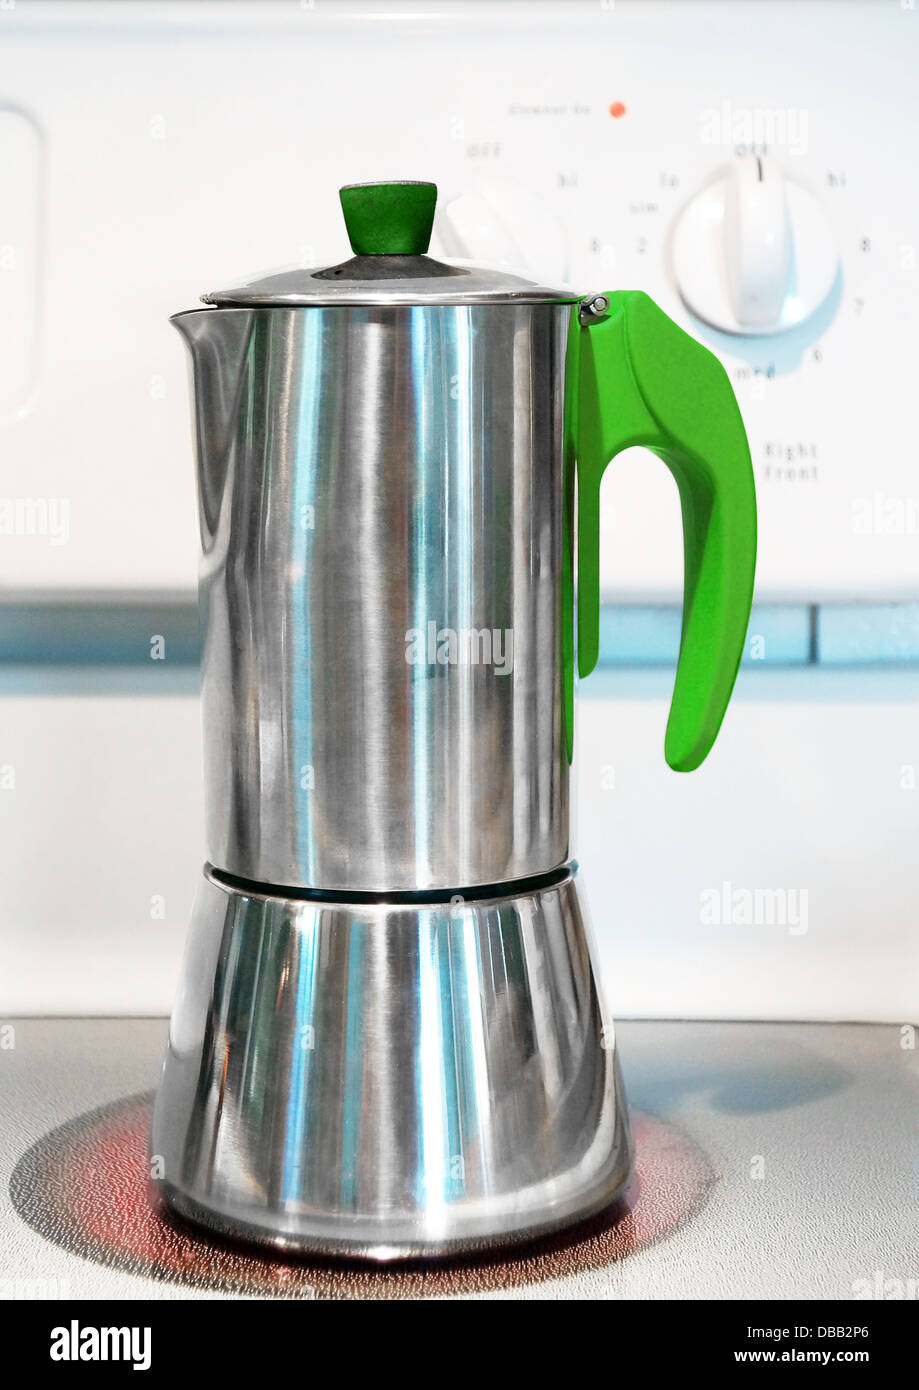 https://c8.alamy.com/comp/DBB2P6/italian-coffee-or-espresso-maker-on-hot-ceramic-stove-top-DBB2P6.jpg